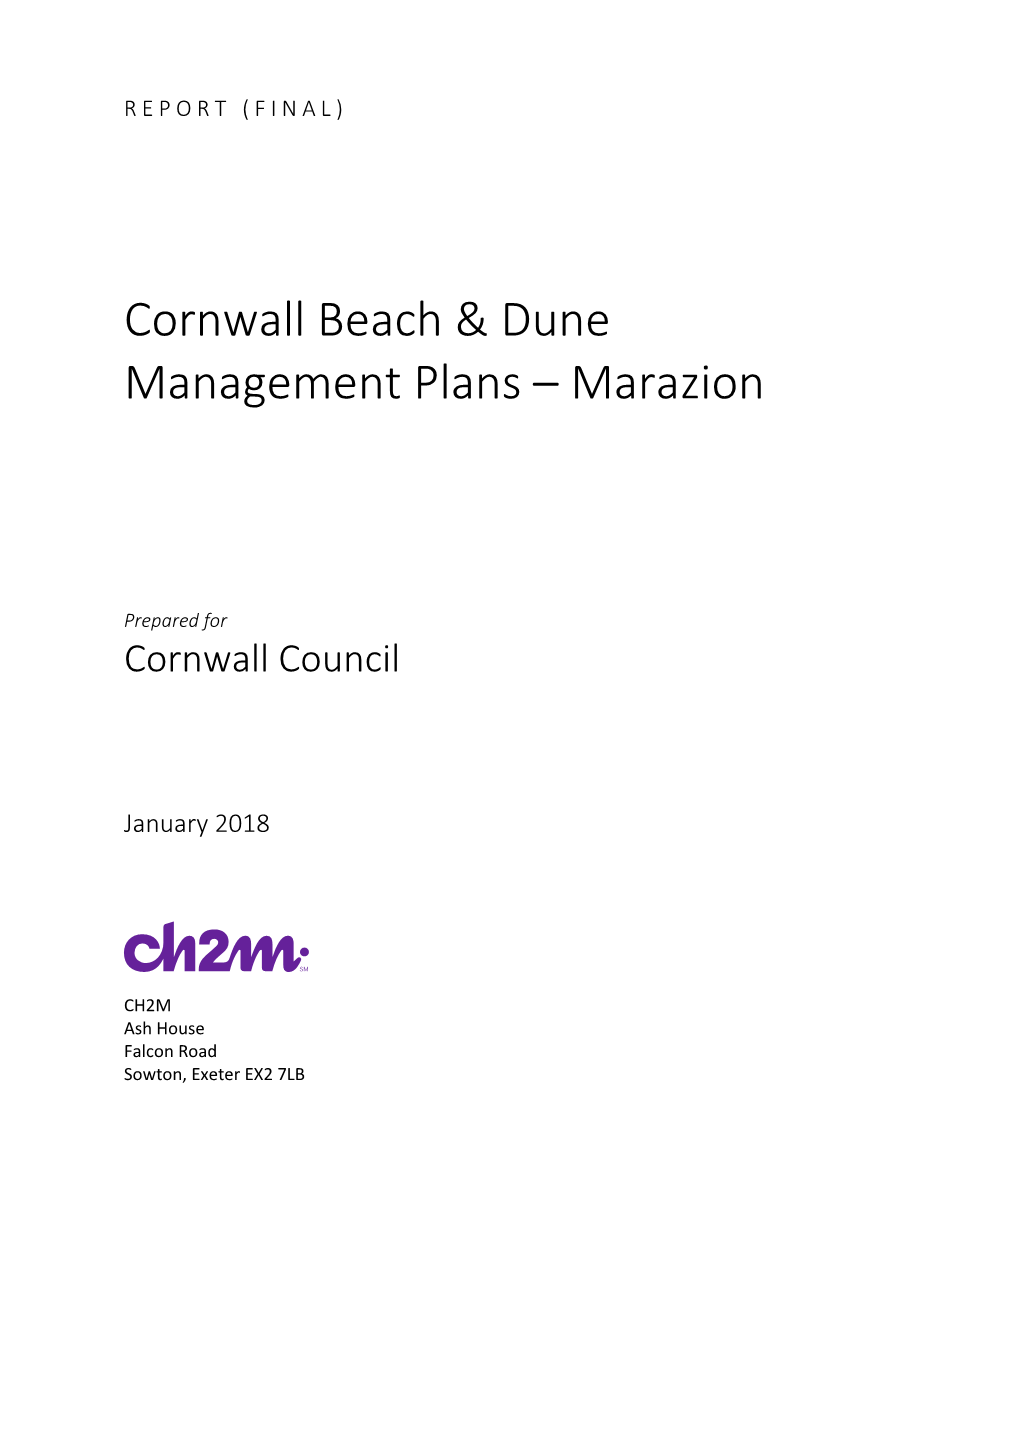 Cornwall Beach & Dune Management Plans – Marazion